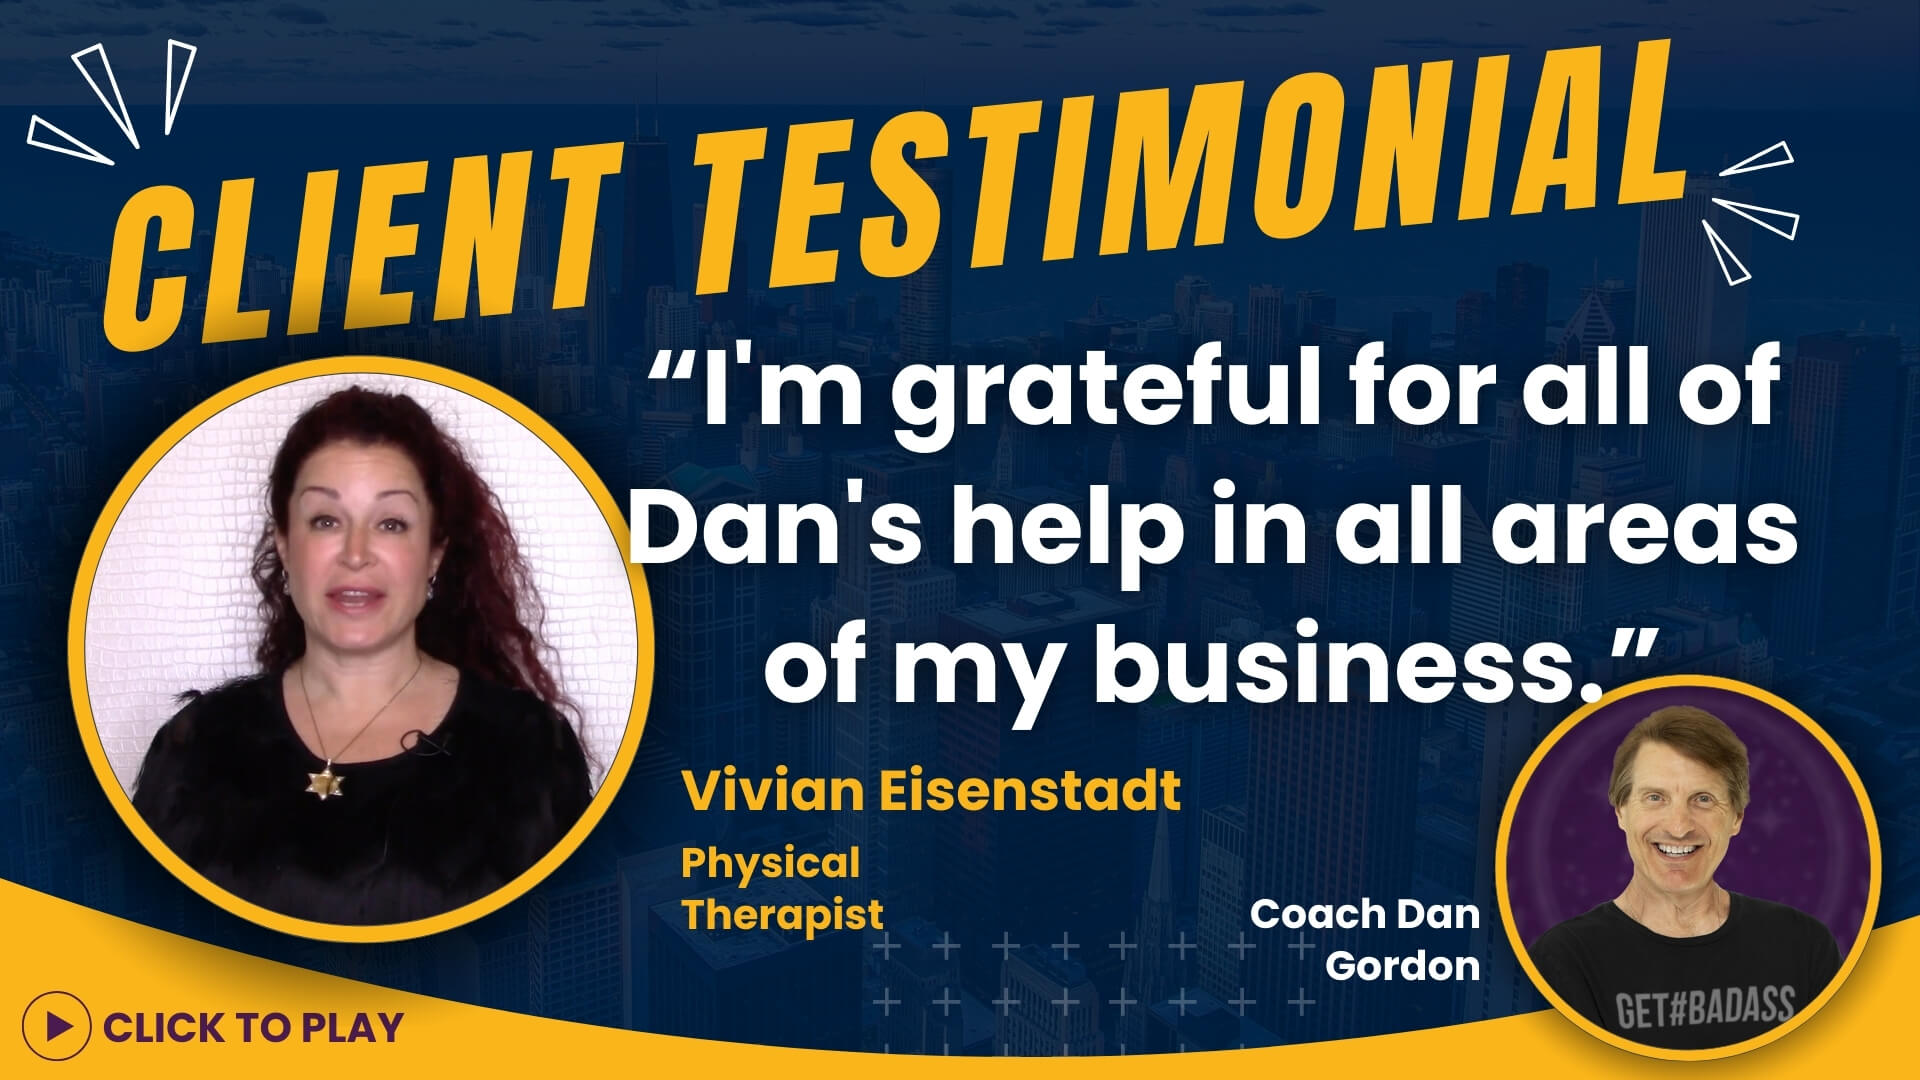 Vivian Eisenstadt, a physical therapist, grateful for Coach Dan Gordon's comprehensive business coaching.